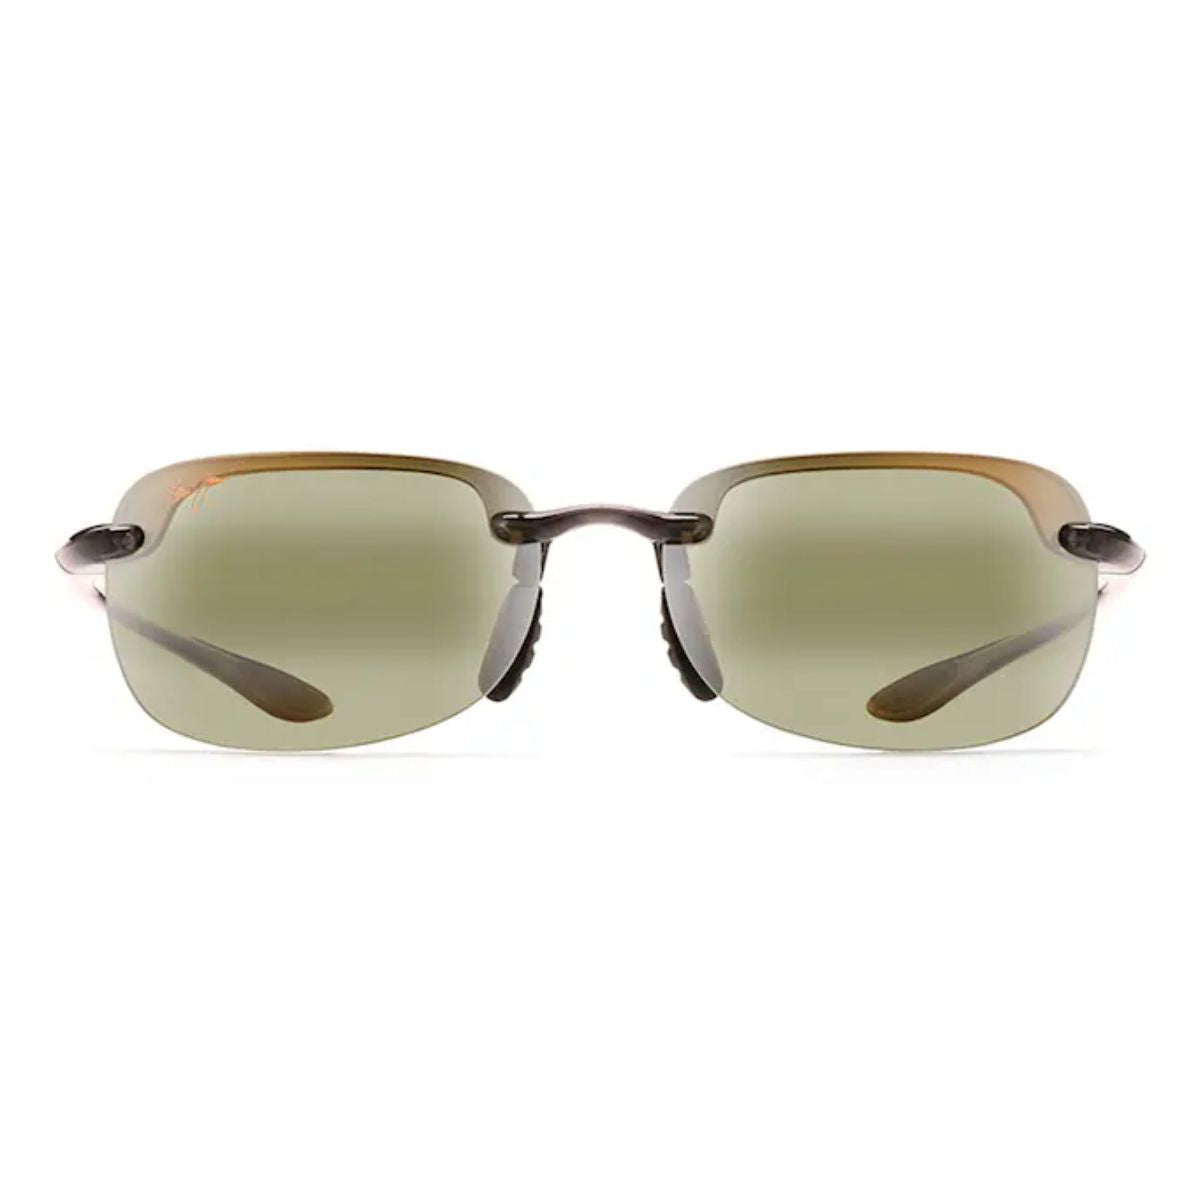 "Shop Trendy Maui Jim Sandy Beach 408N-11 Sunglasses For Men's At Optorium"